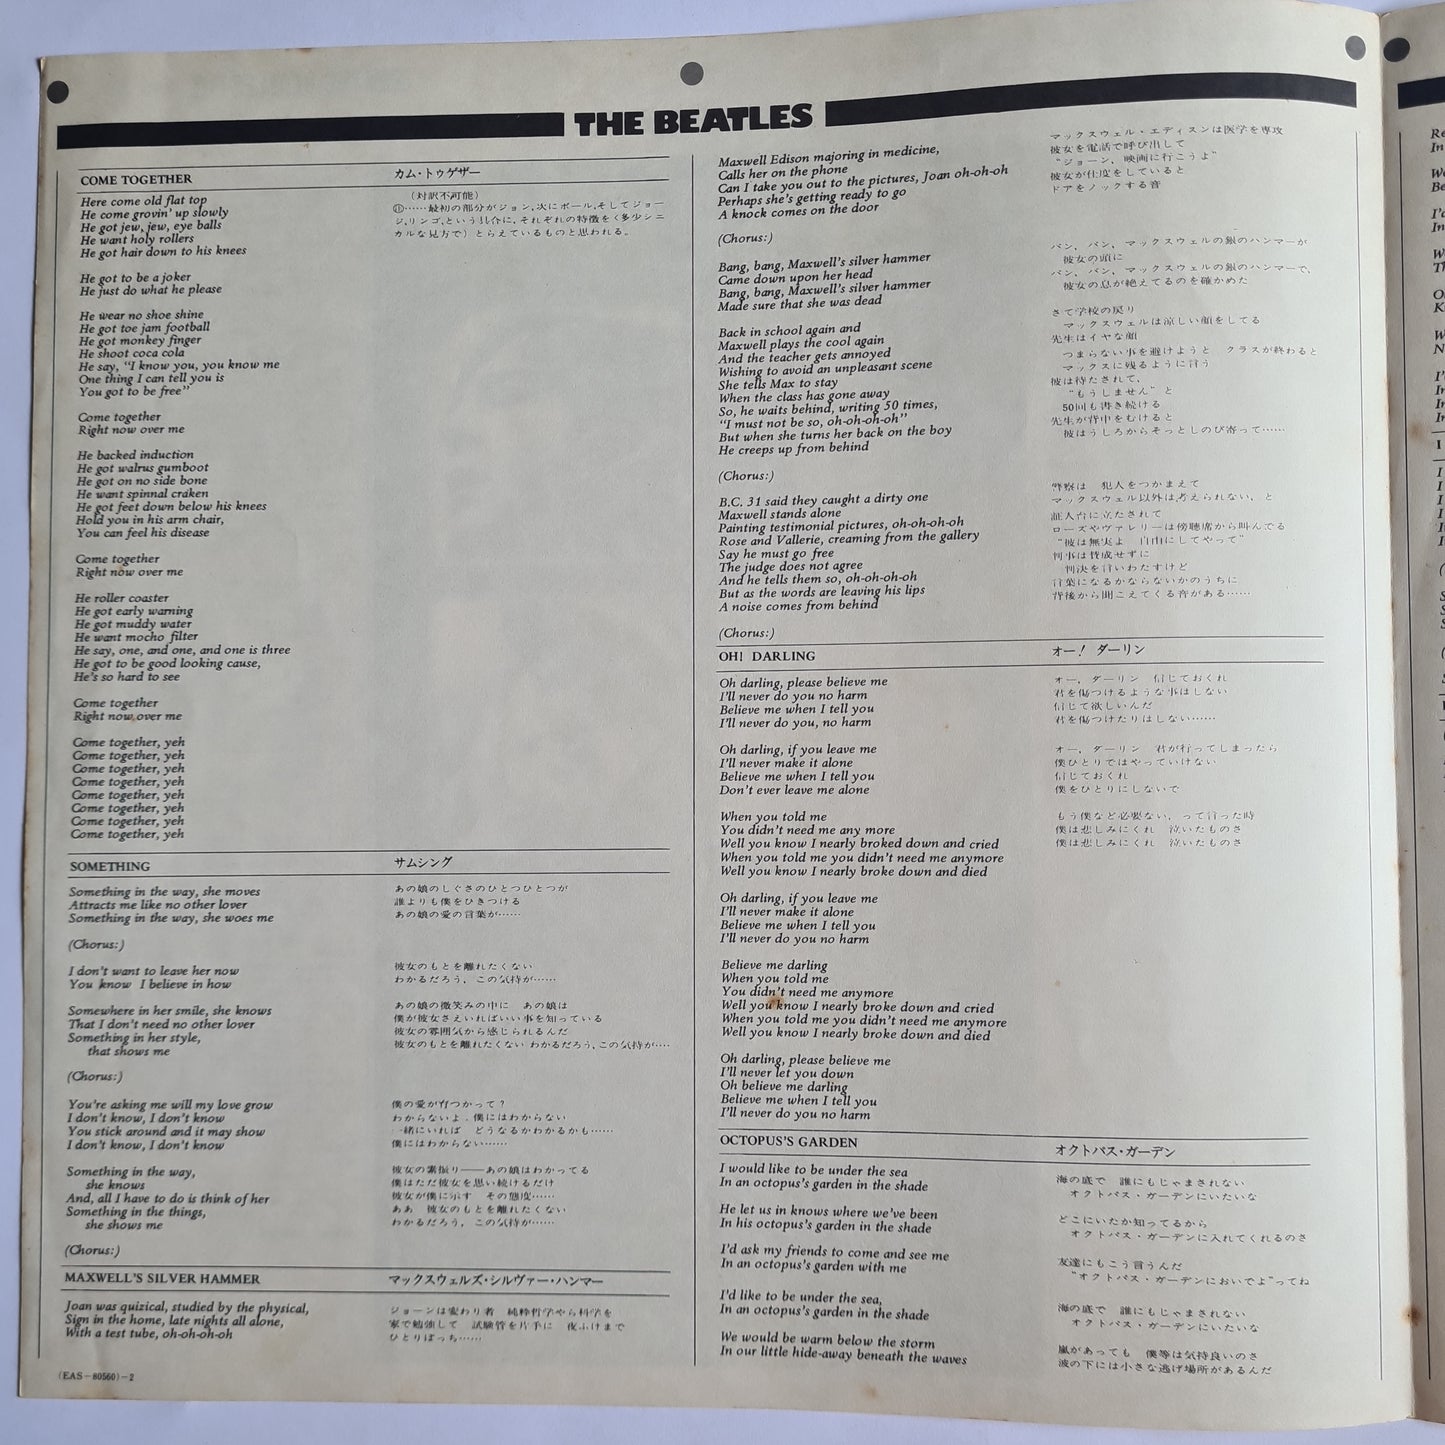 The Beatles – Abbey Road - 1969 (1976 Japanese Pressing) - Vinyl Record